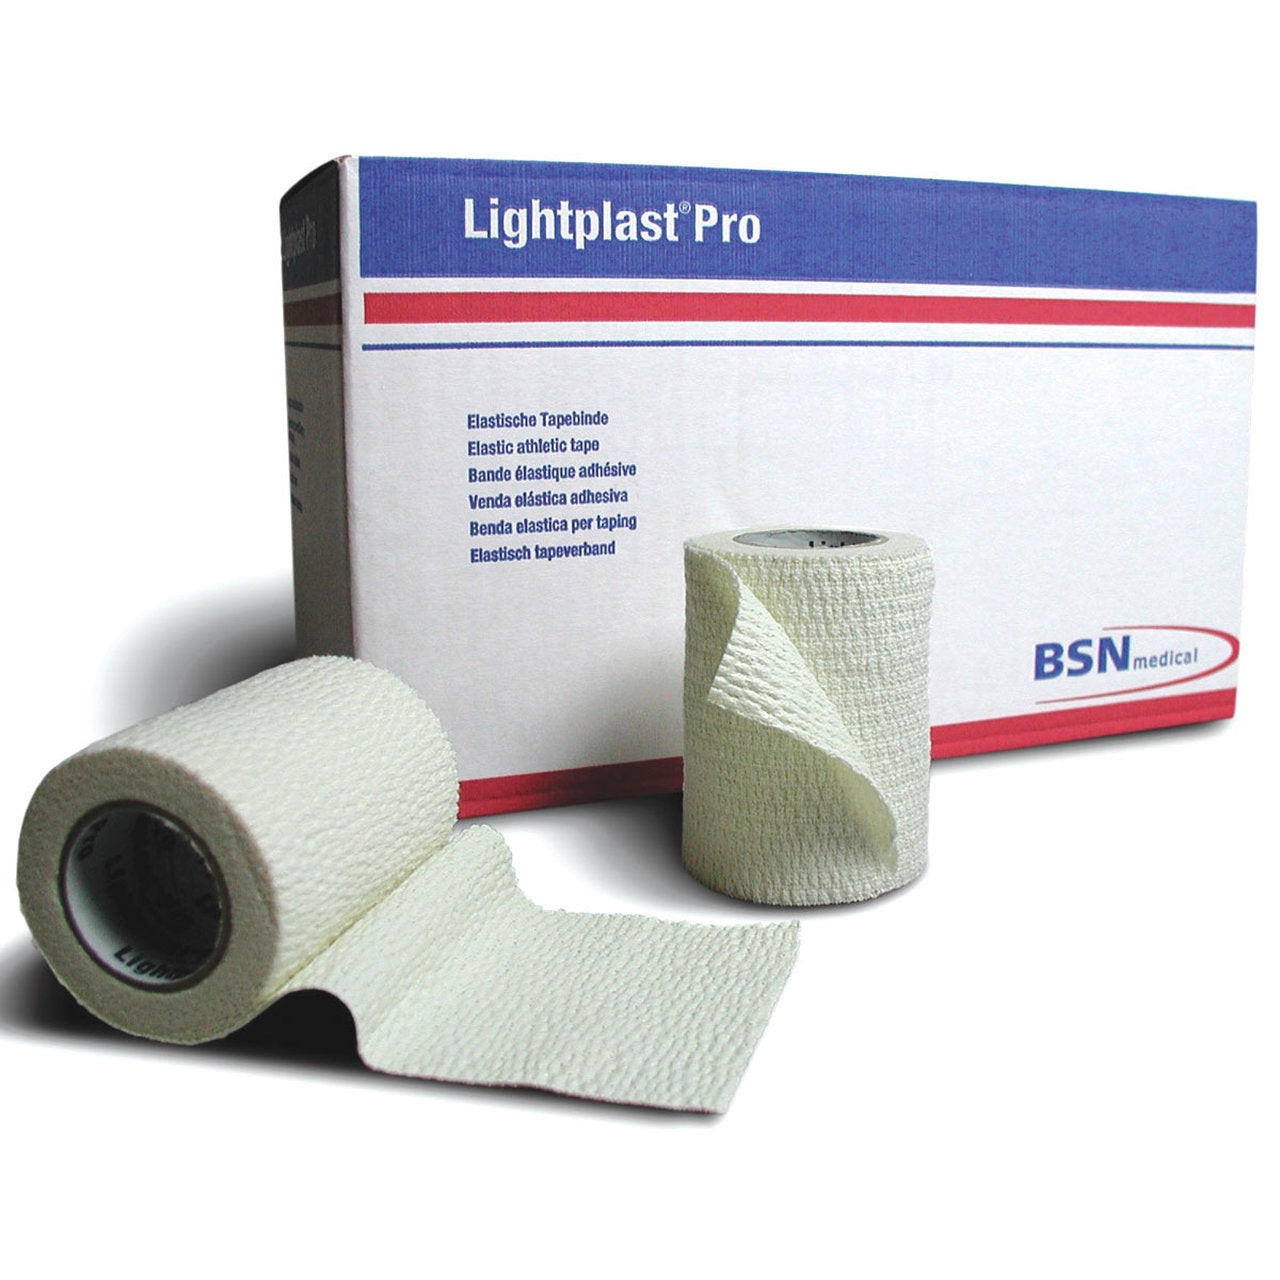 Lightplast Pro -  5cm x 6.8cm